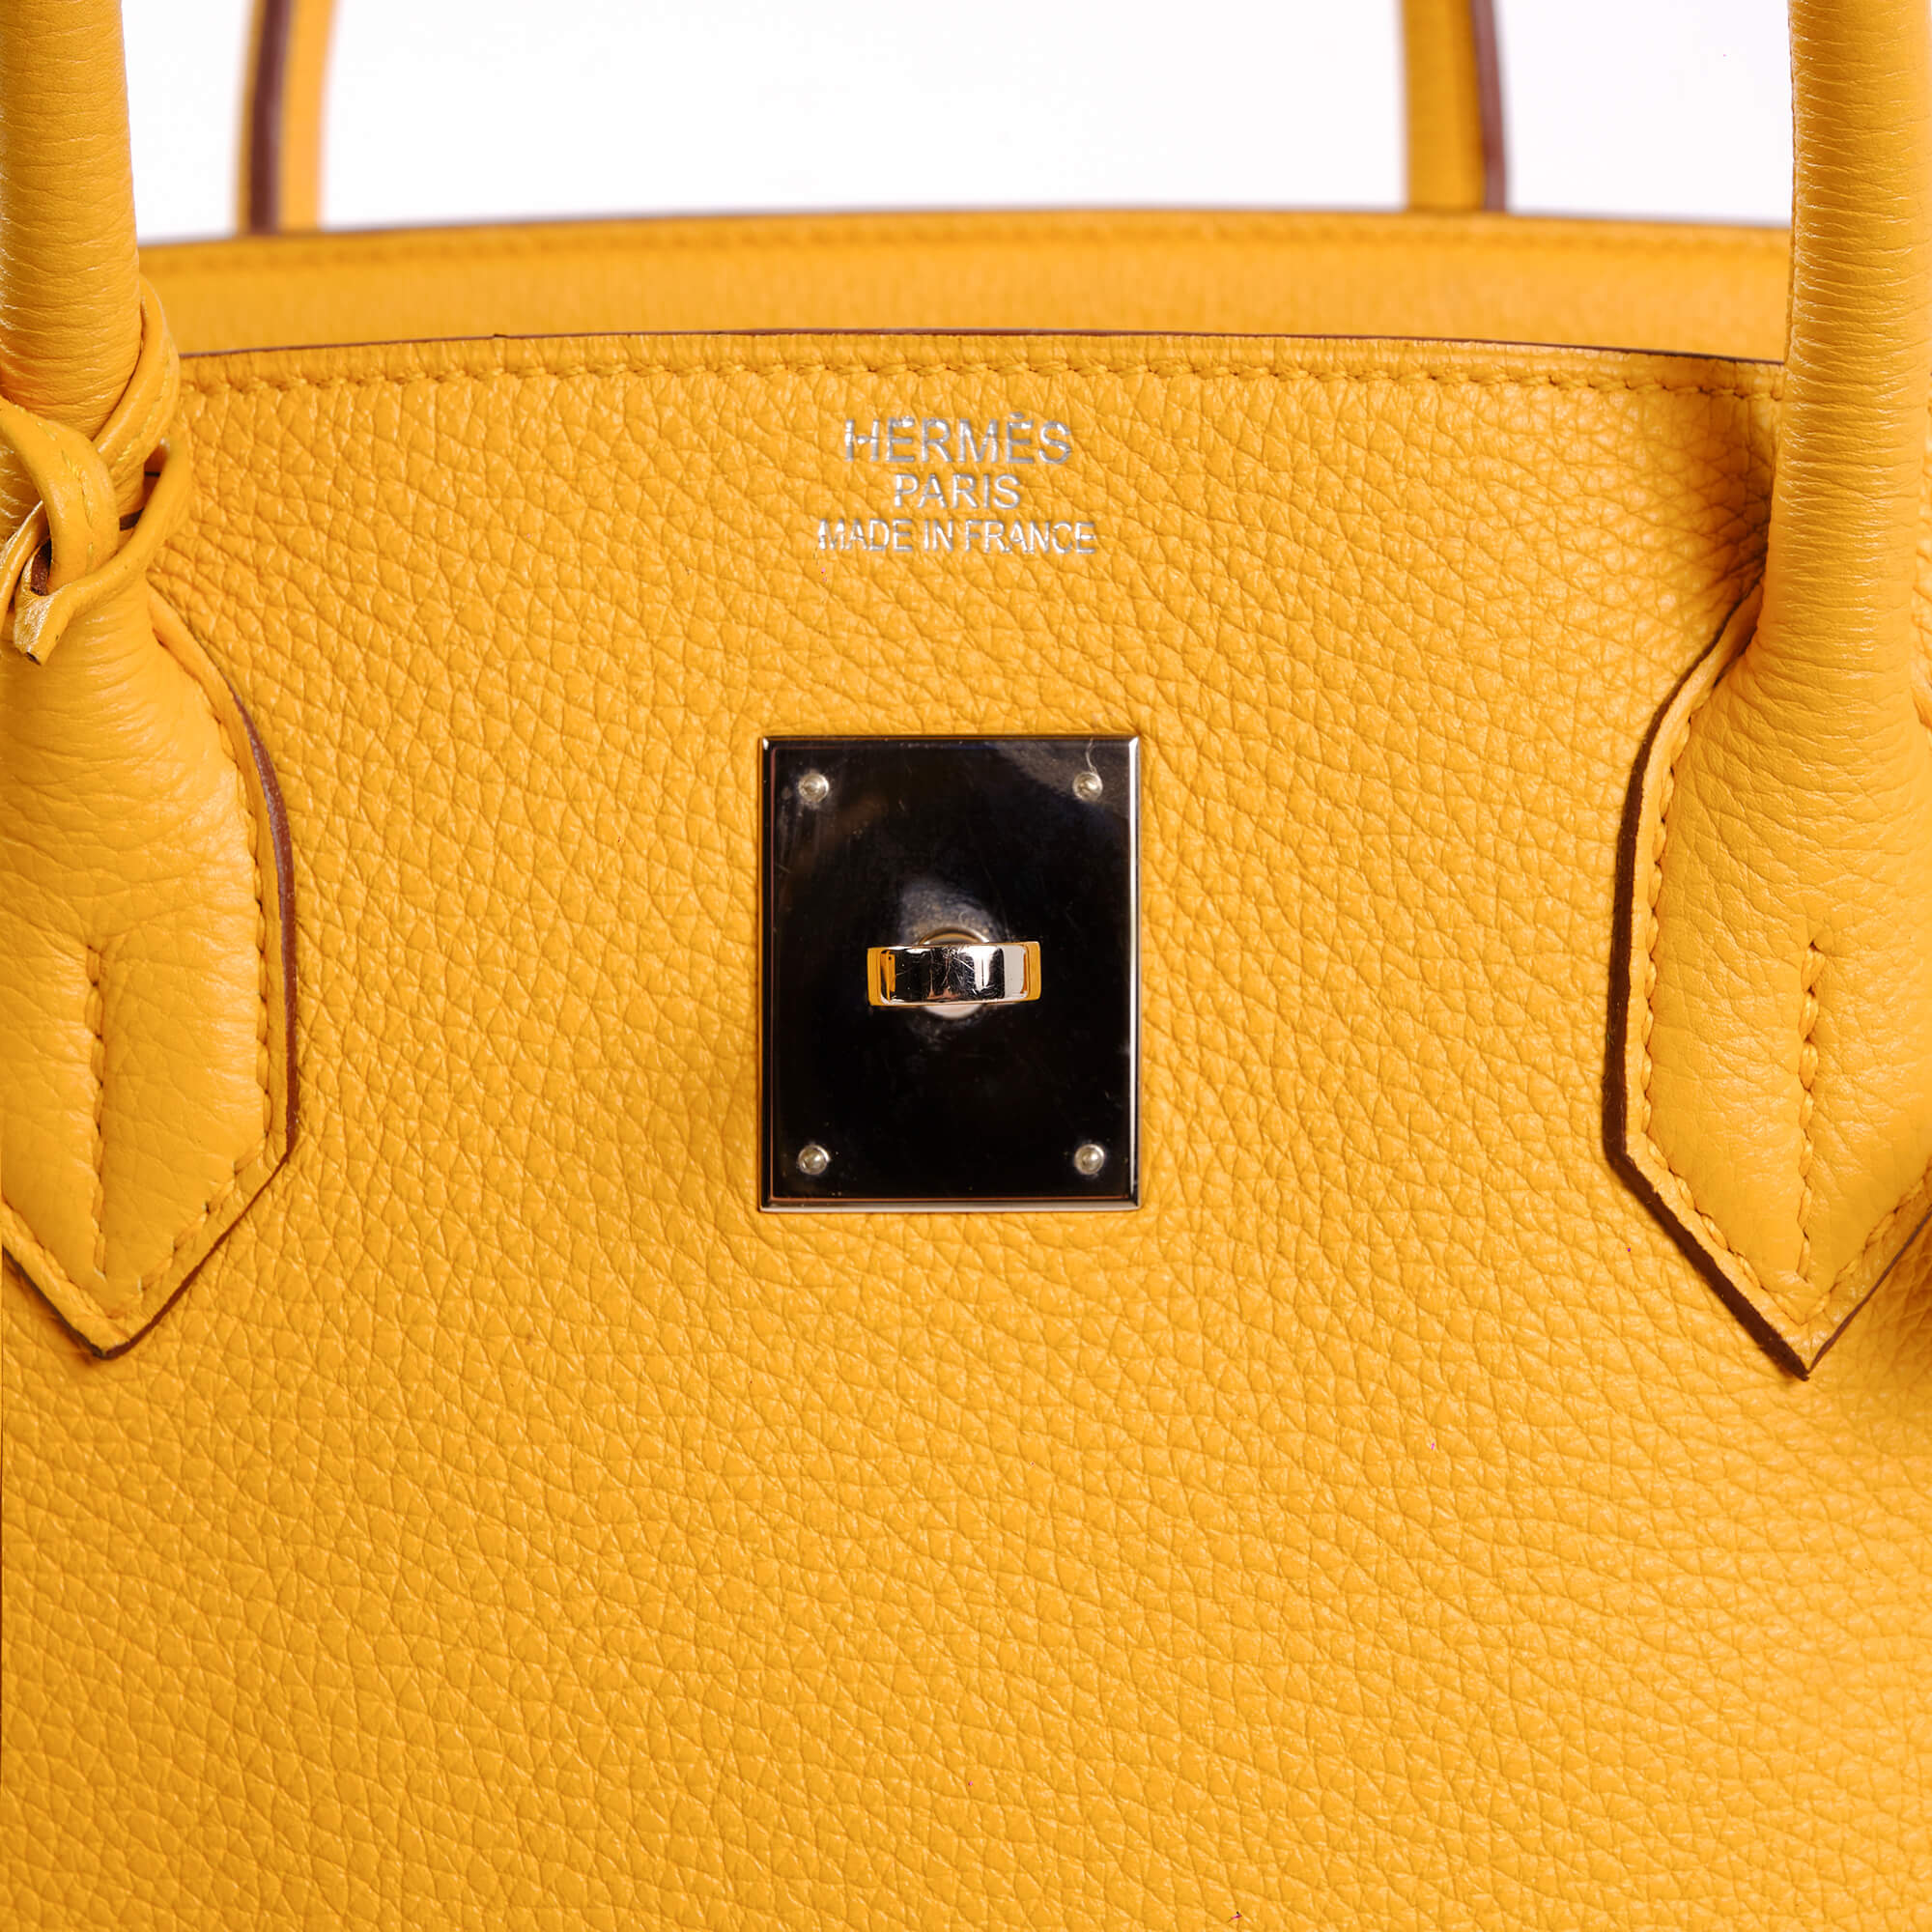 Hermès - Authenticated Birkin 40 Handbag - Leather Yellow for Women, Good Condition